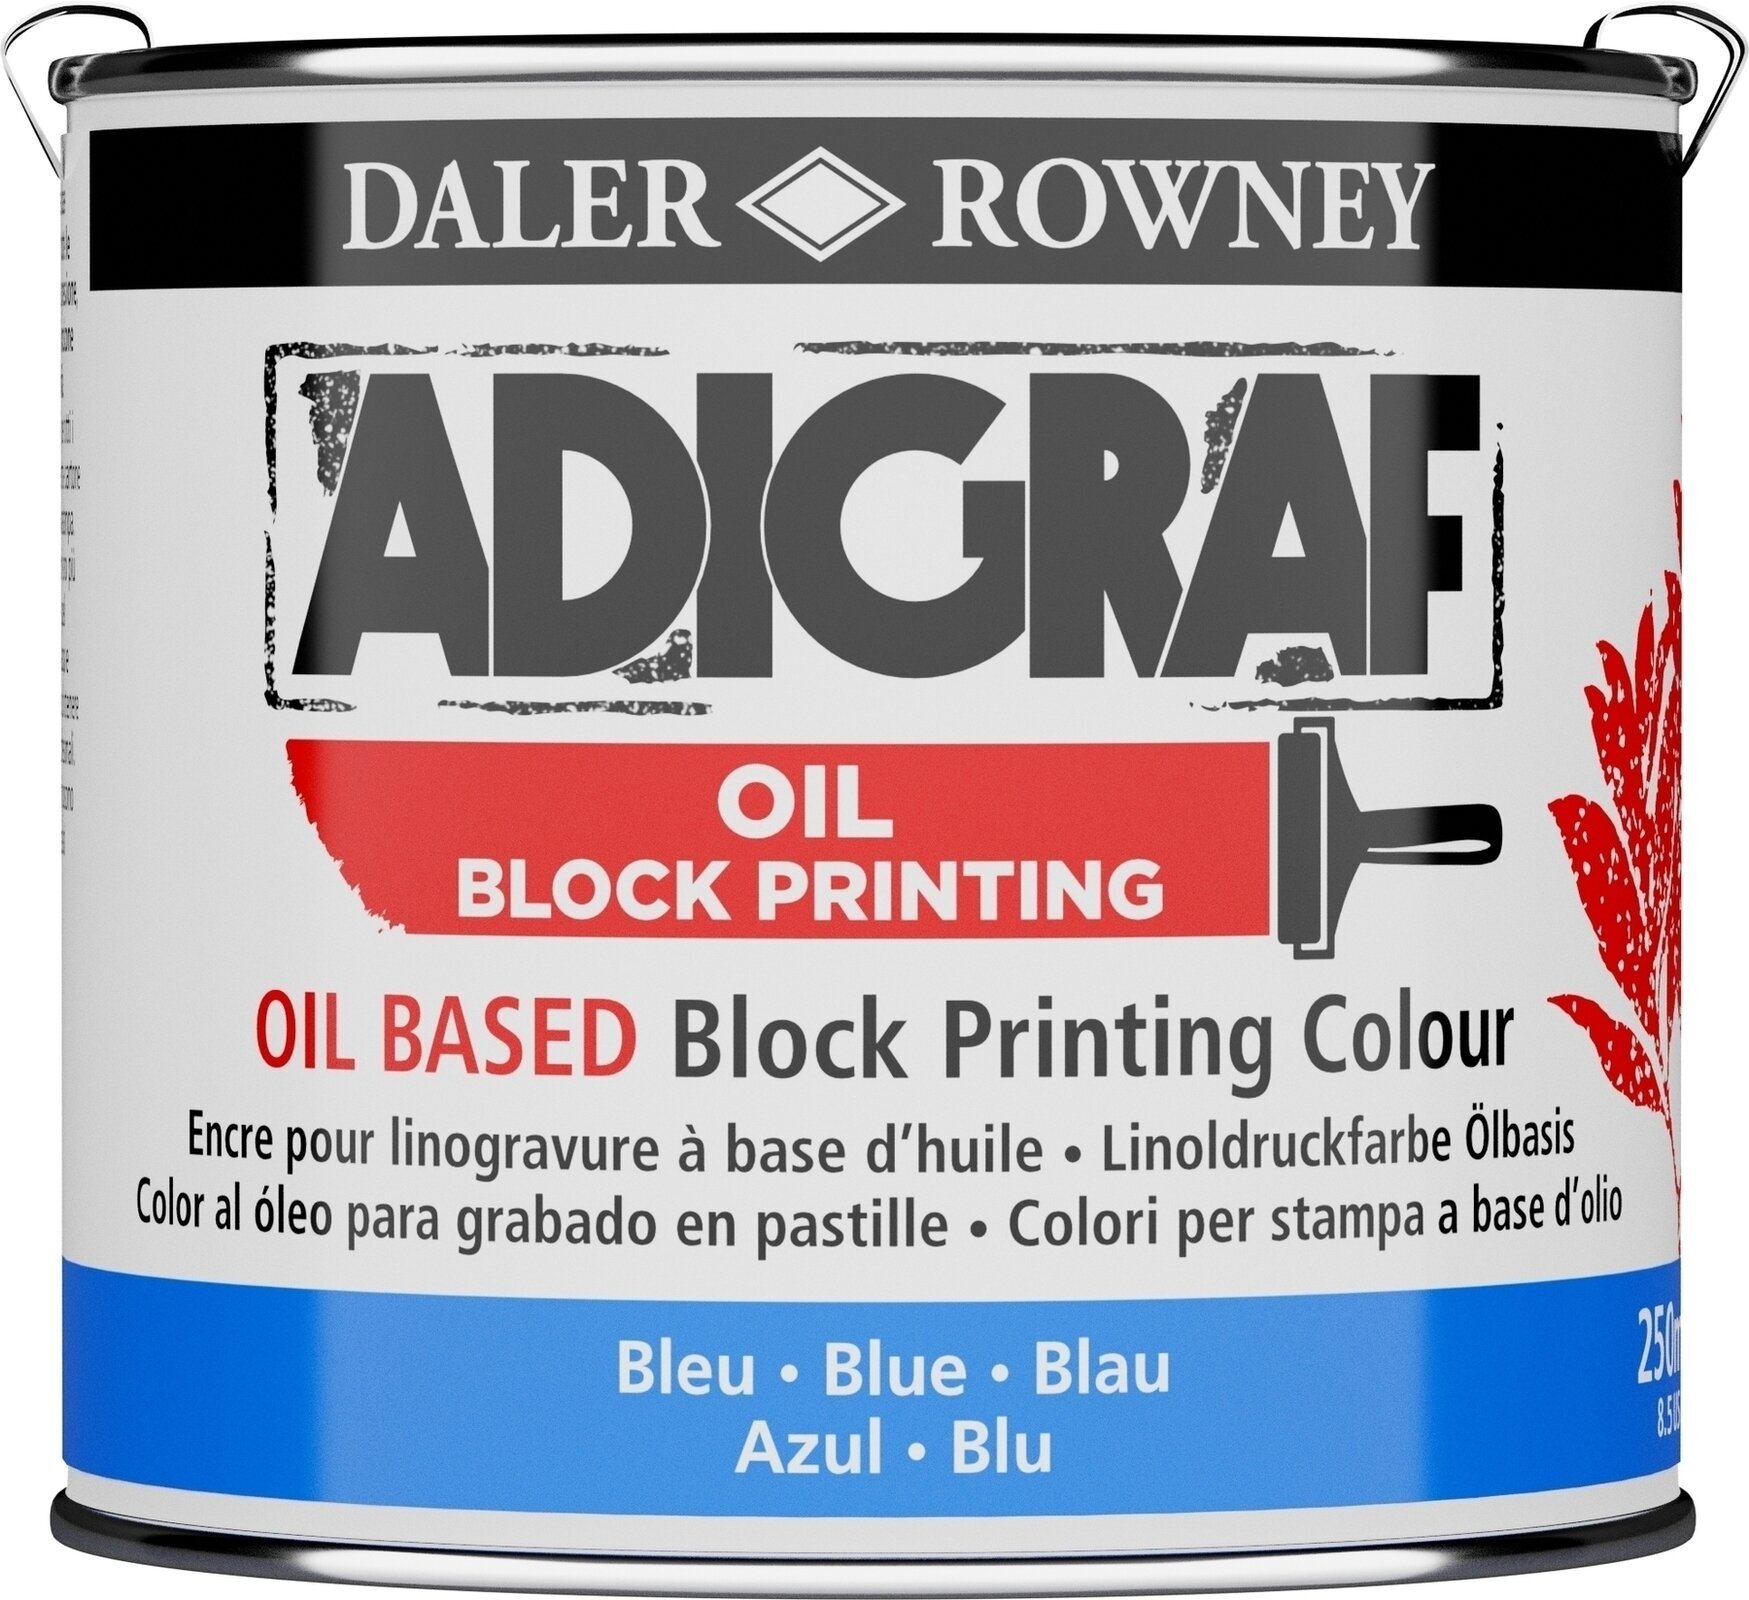 Paint For Linocut Daler Rowney Adigraf Block Printing Oil Paint For Linocut Blue 250 ml